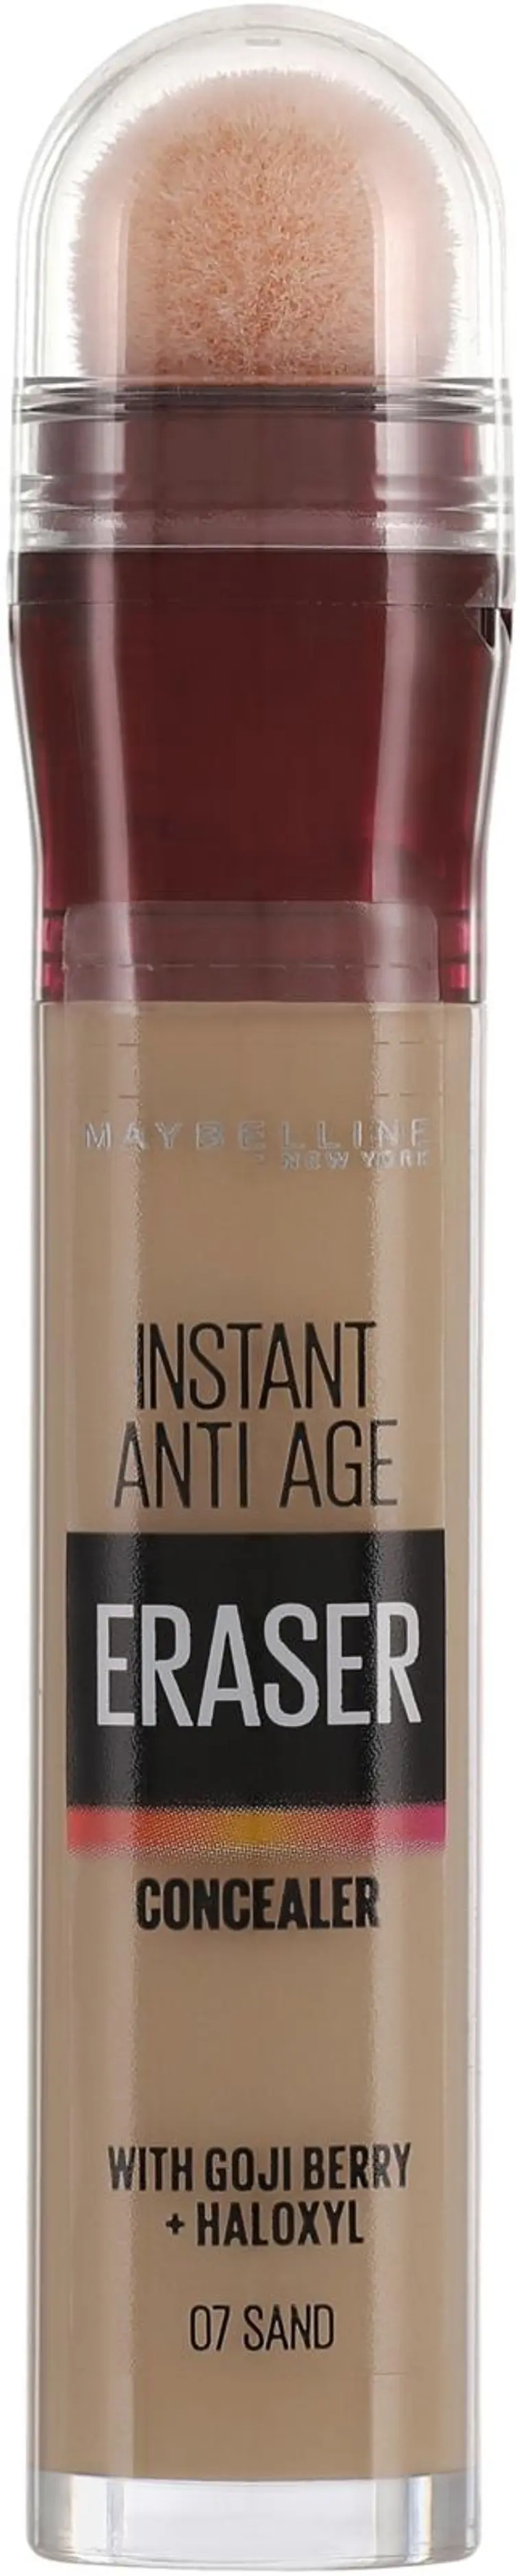 Maybelline New York Instant Anti Age Eraser 07 Sand peitevoide 6,8ml